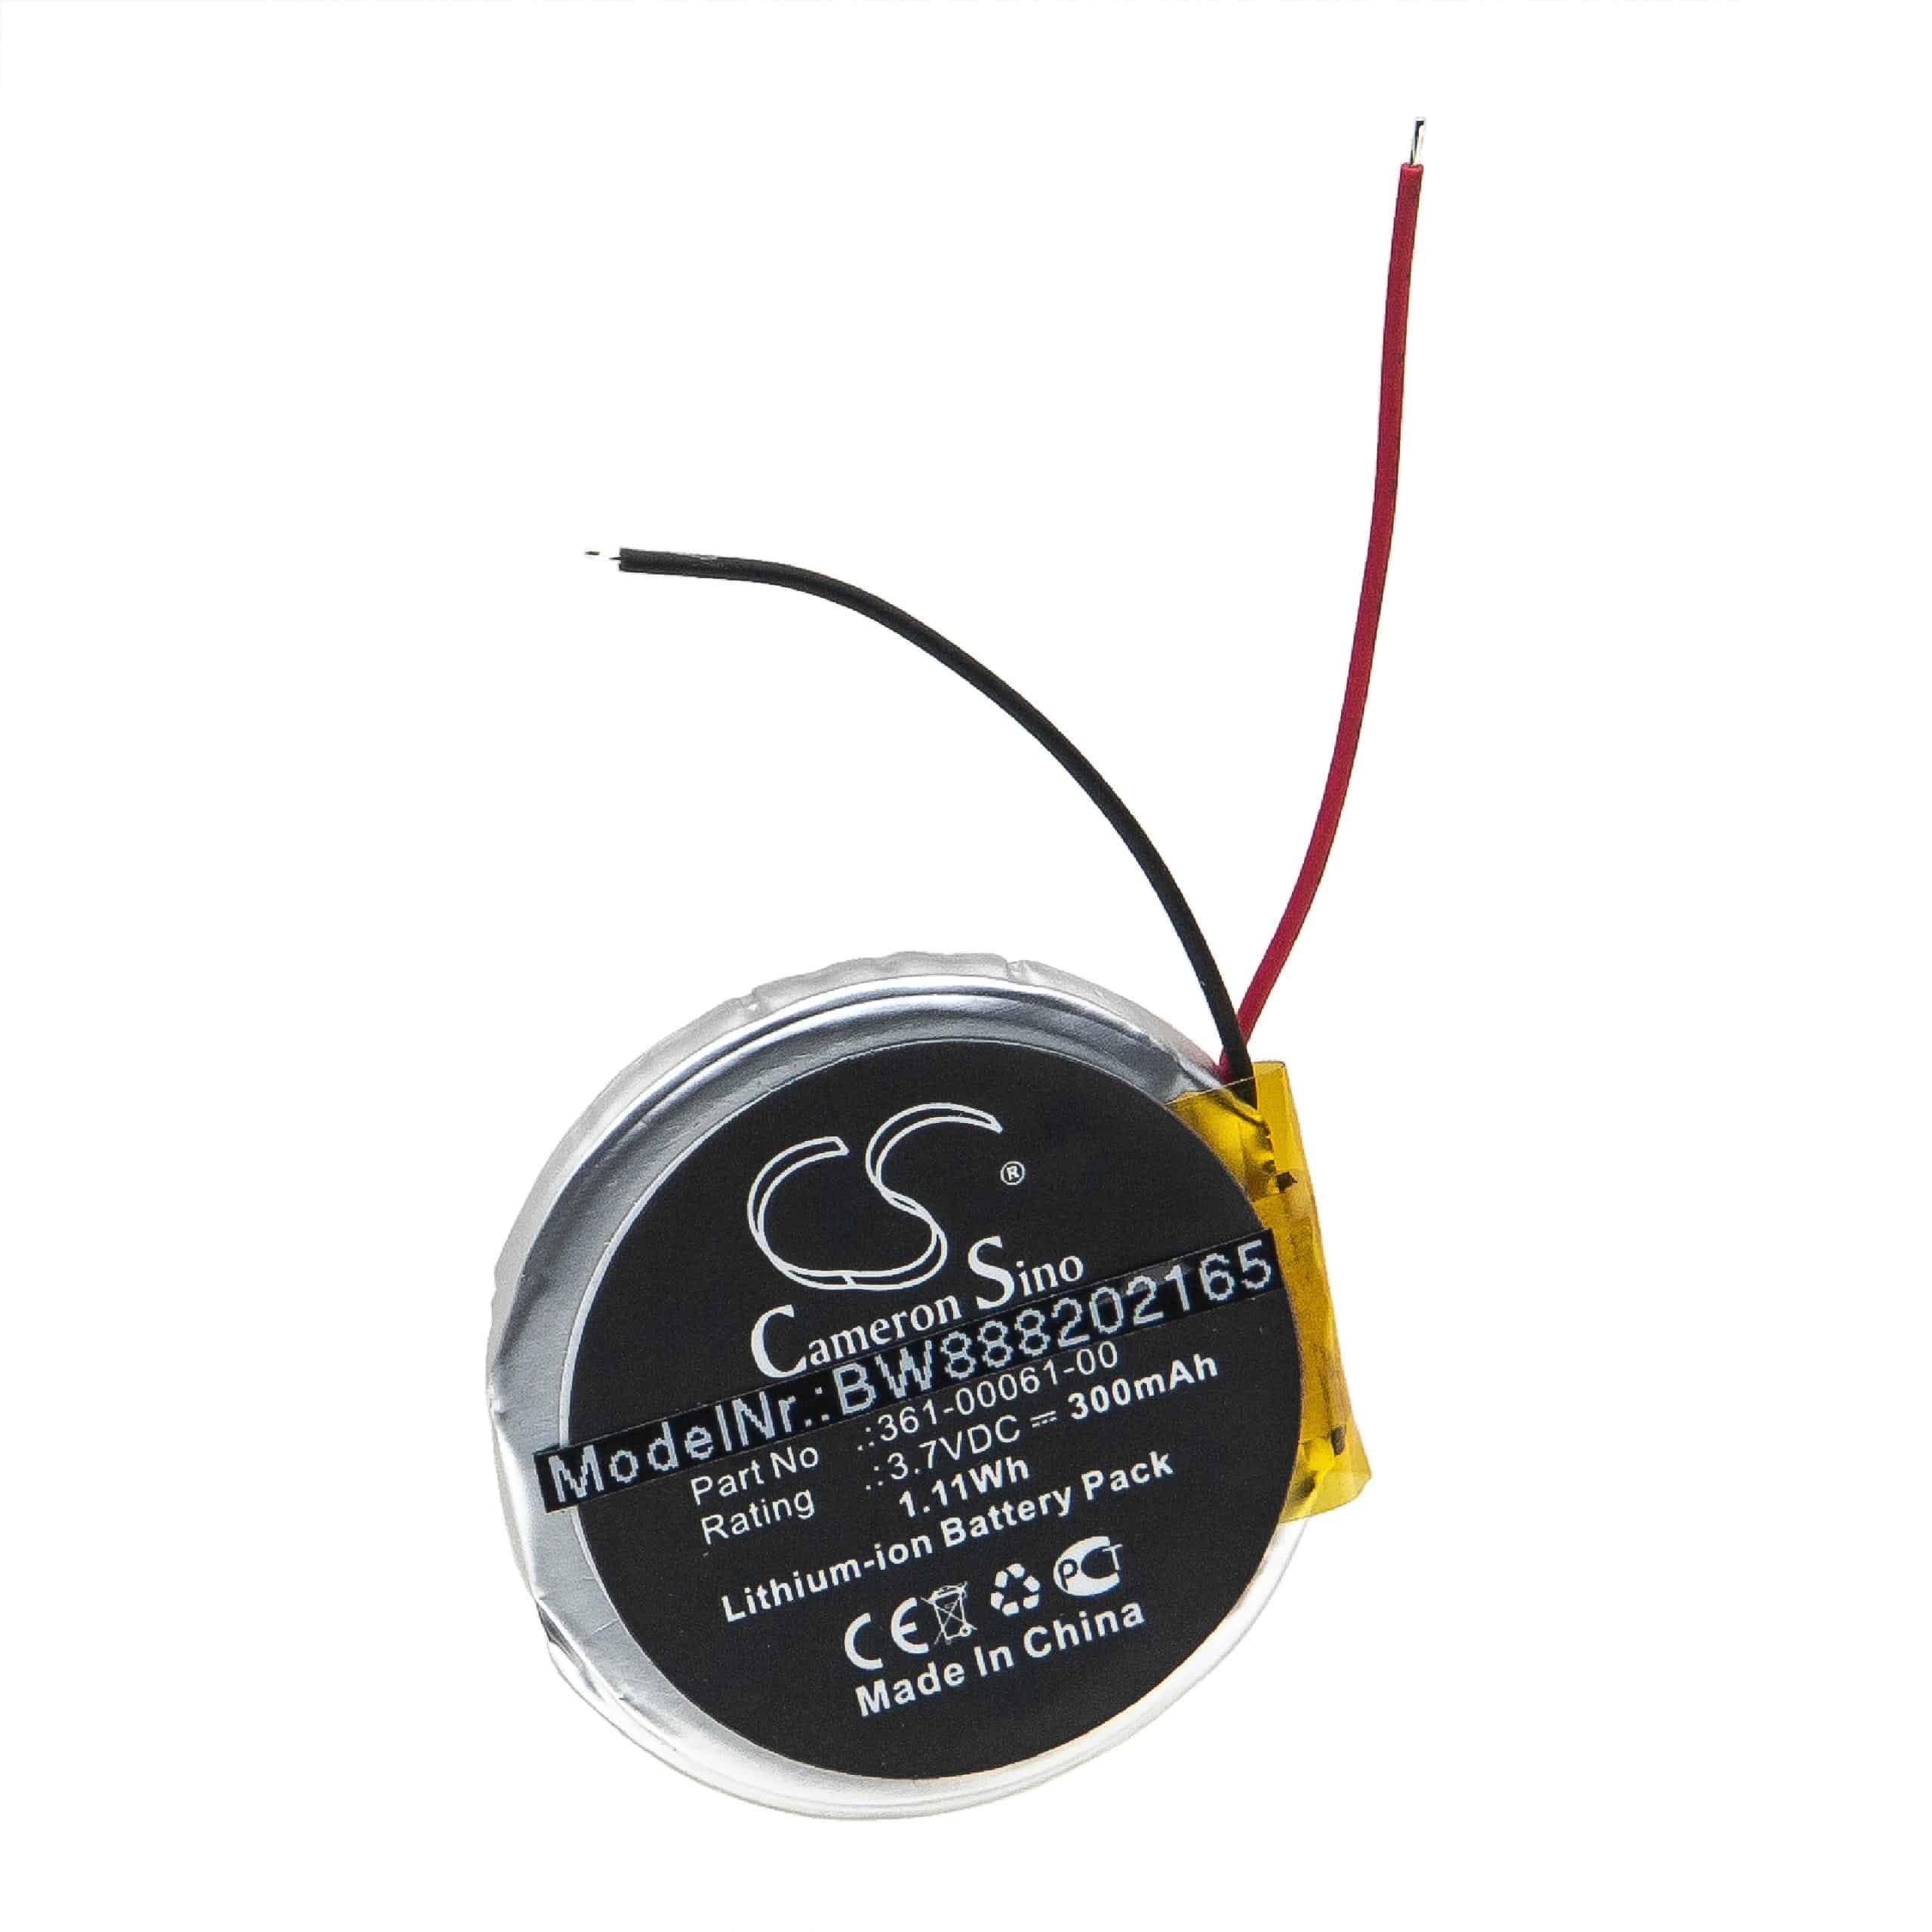 Smartwatch Battery Replacement for Garmin PD3555w, 361-00061-00, PD3555 - 450mAh 3.7V Li-Ion